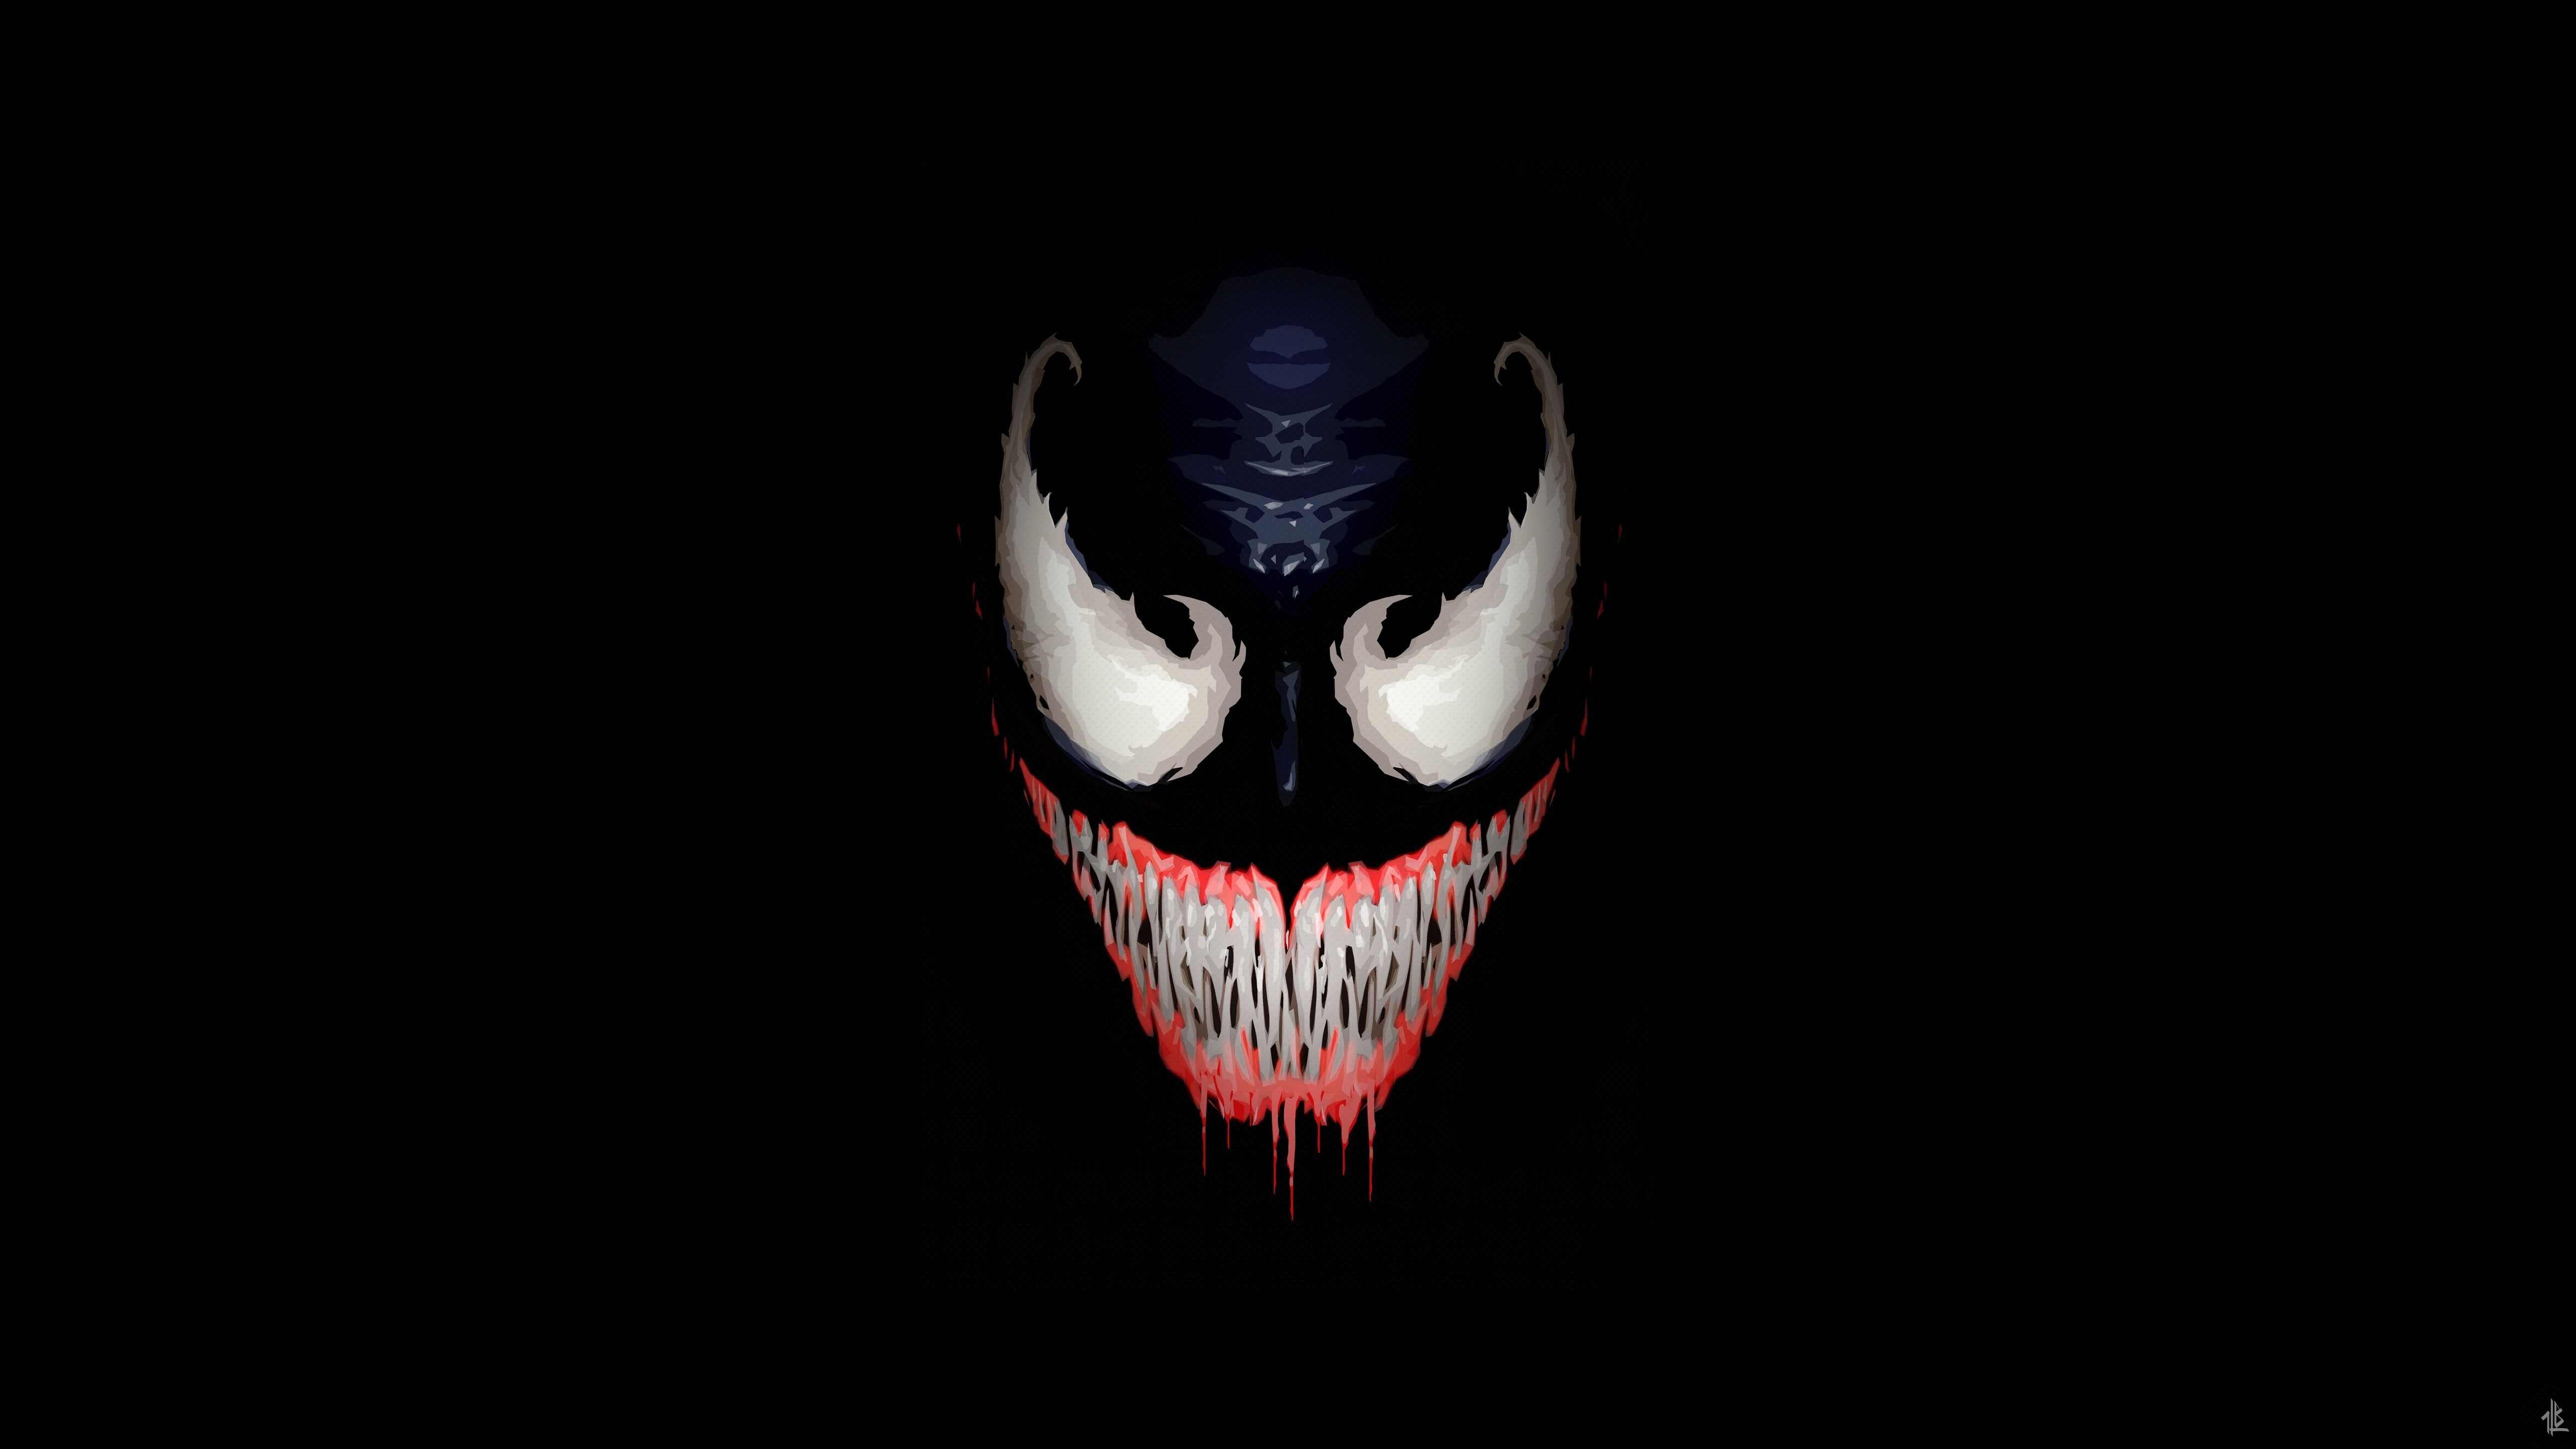 Wallpaper Venom, face, teeth, black background, art picture 5120x2880 UHD 5K Picture, Image